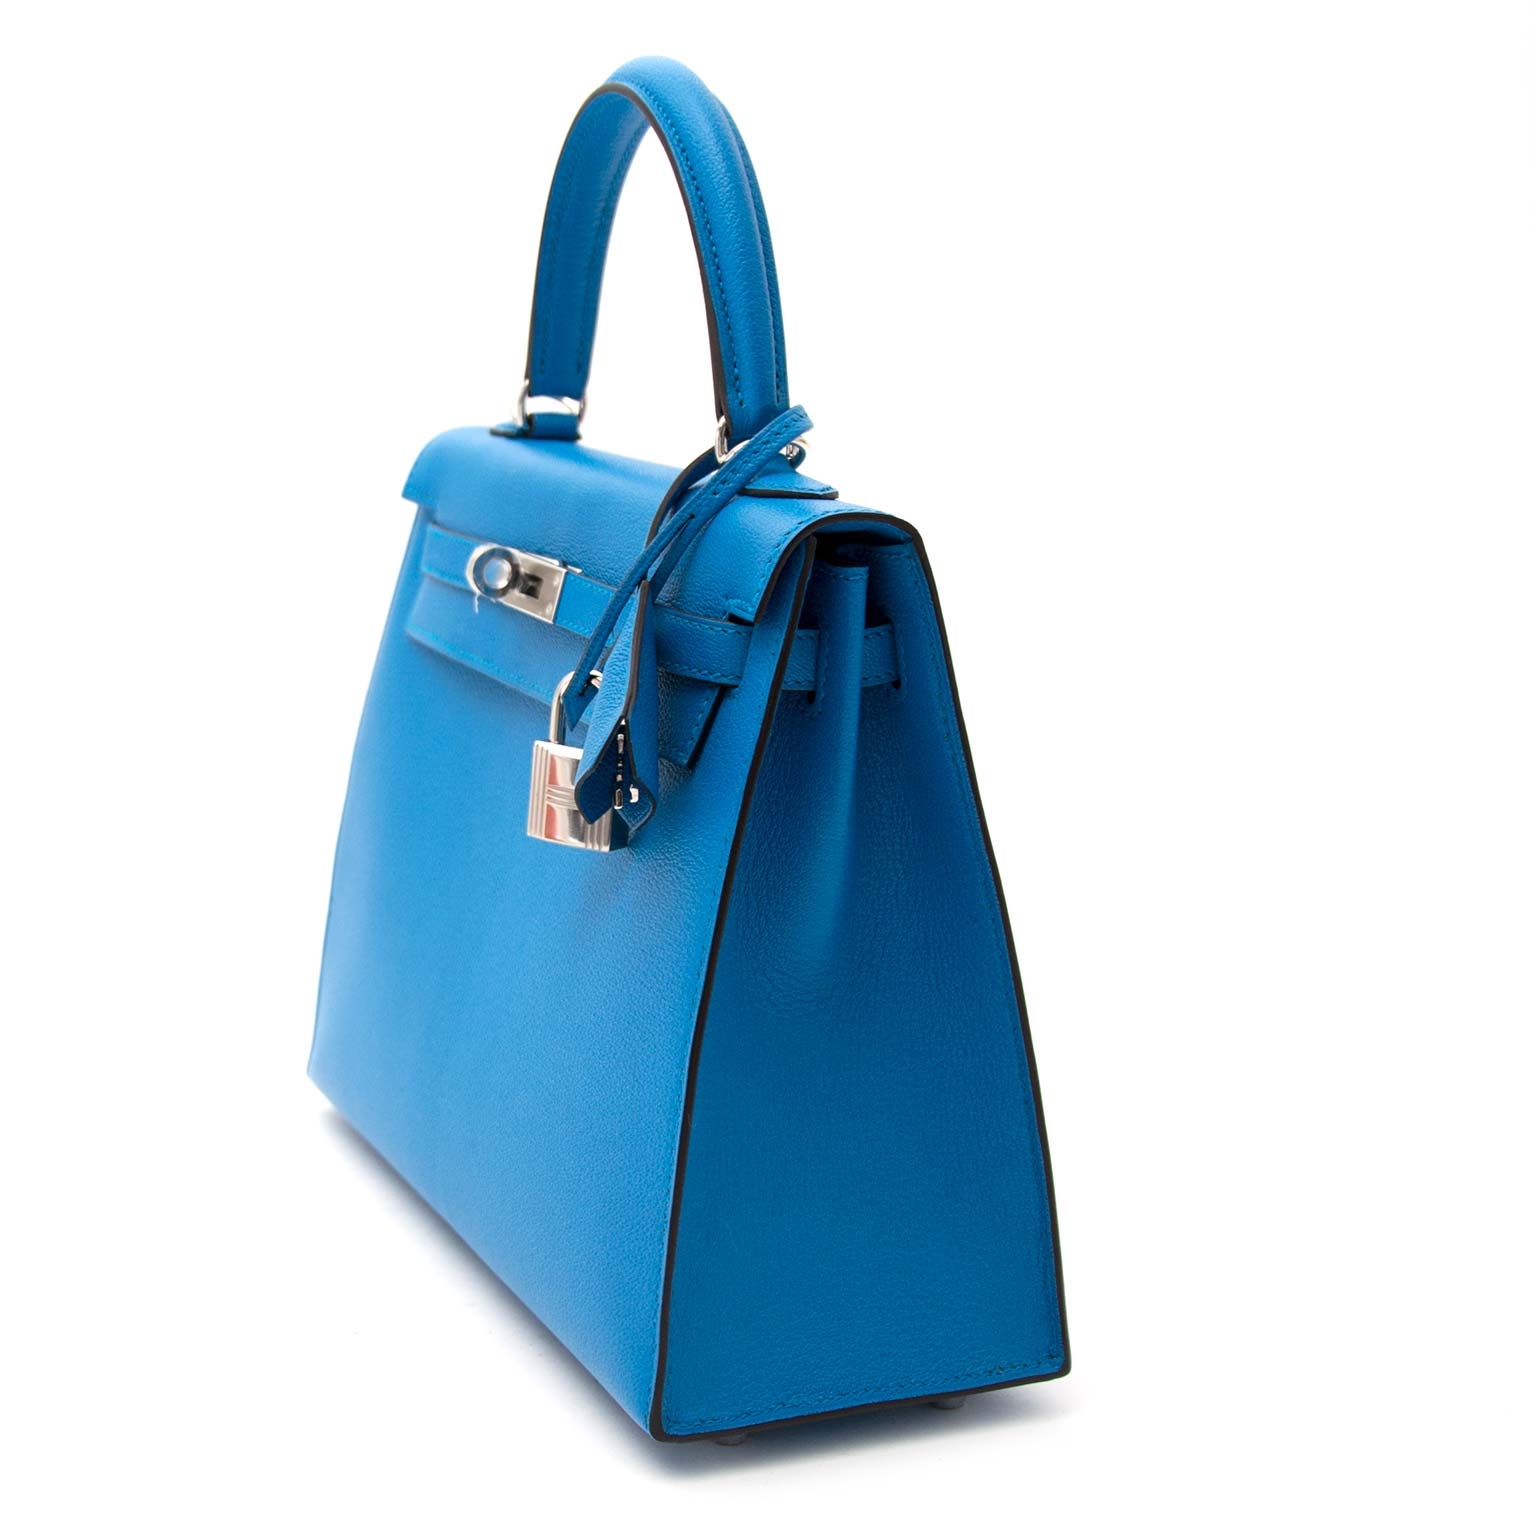 Luxmiila bags - NEW kelly 25 blue sapphire epsom ghw 💳We accept